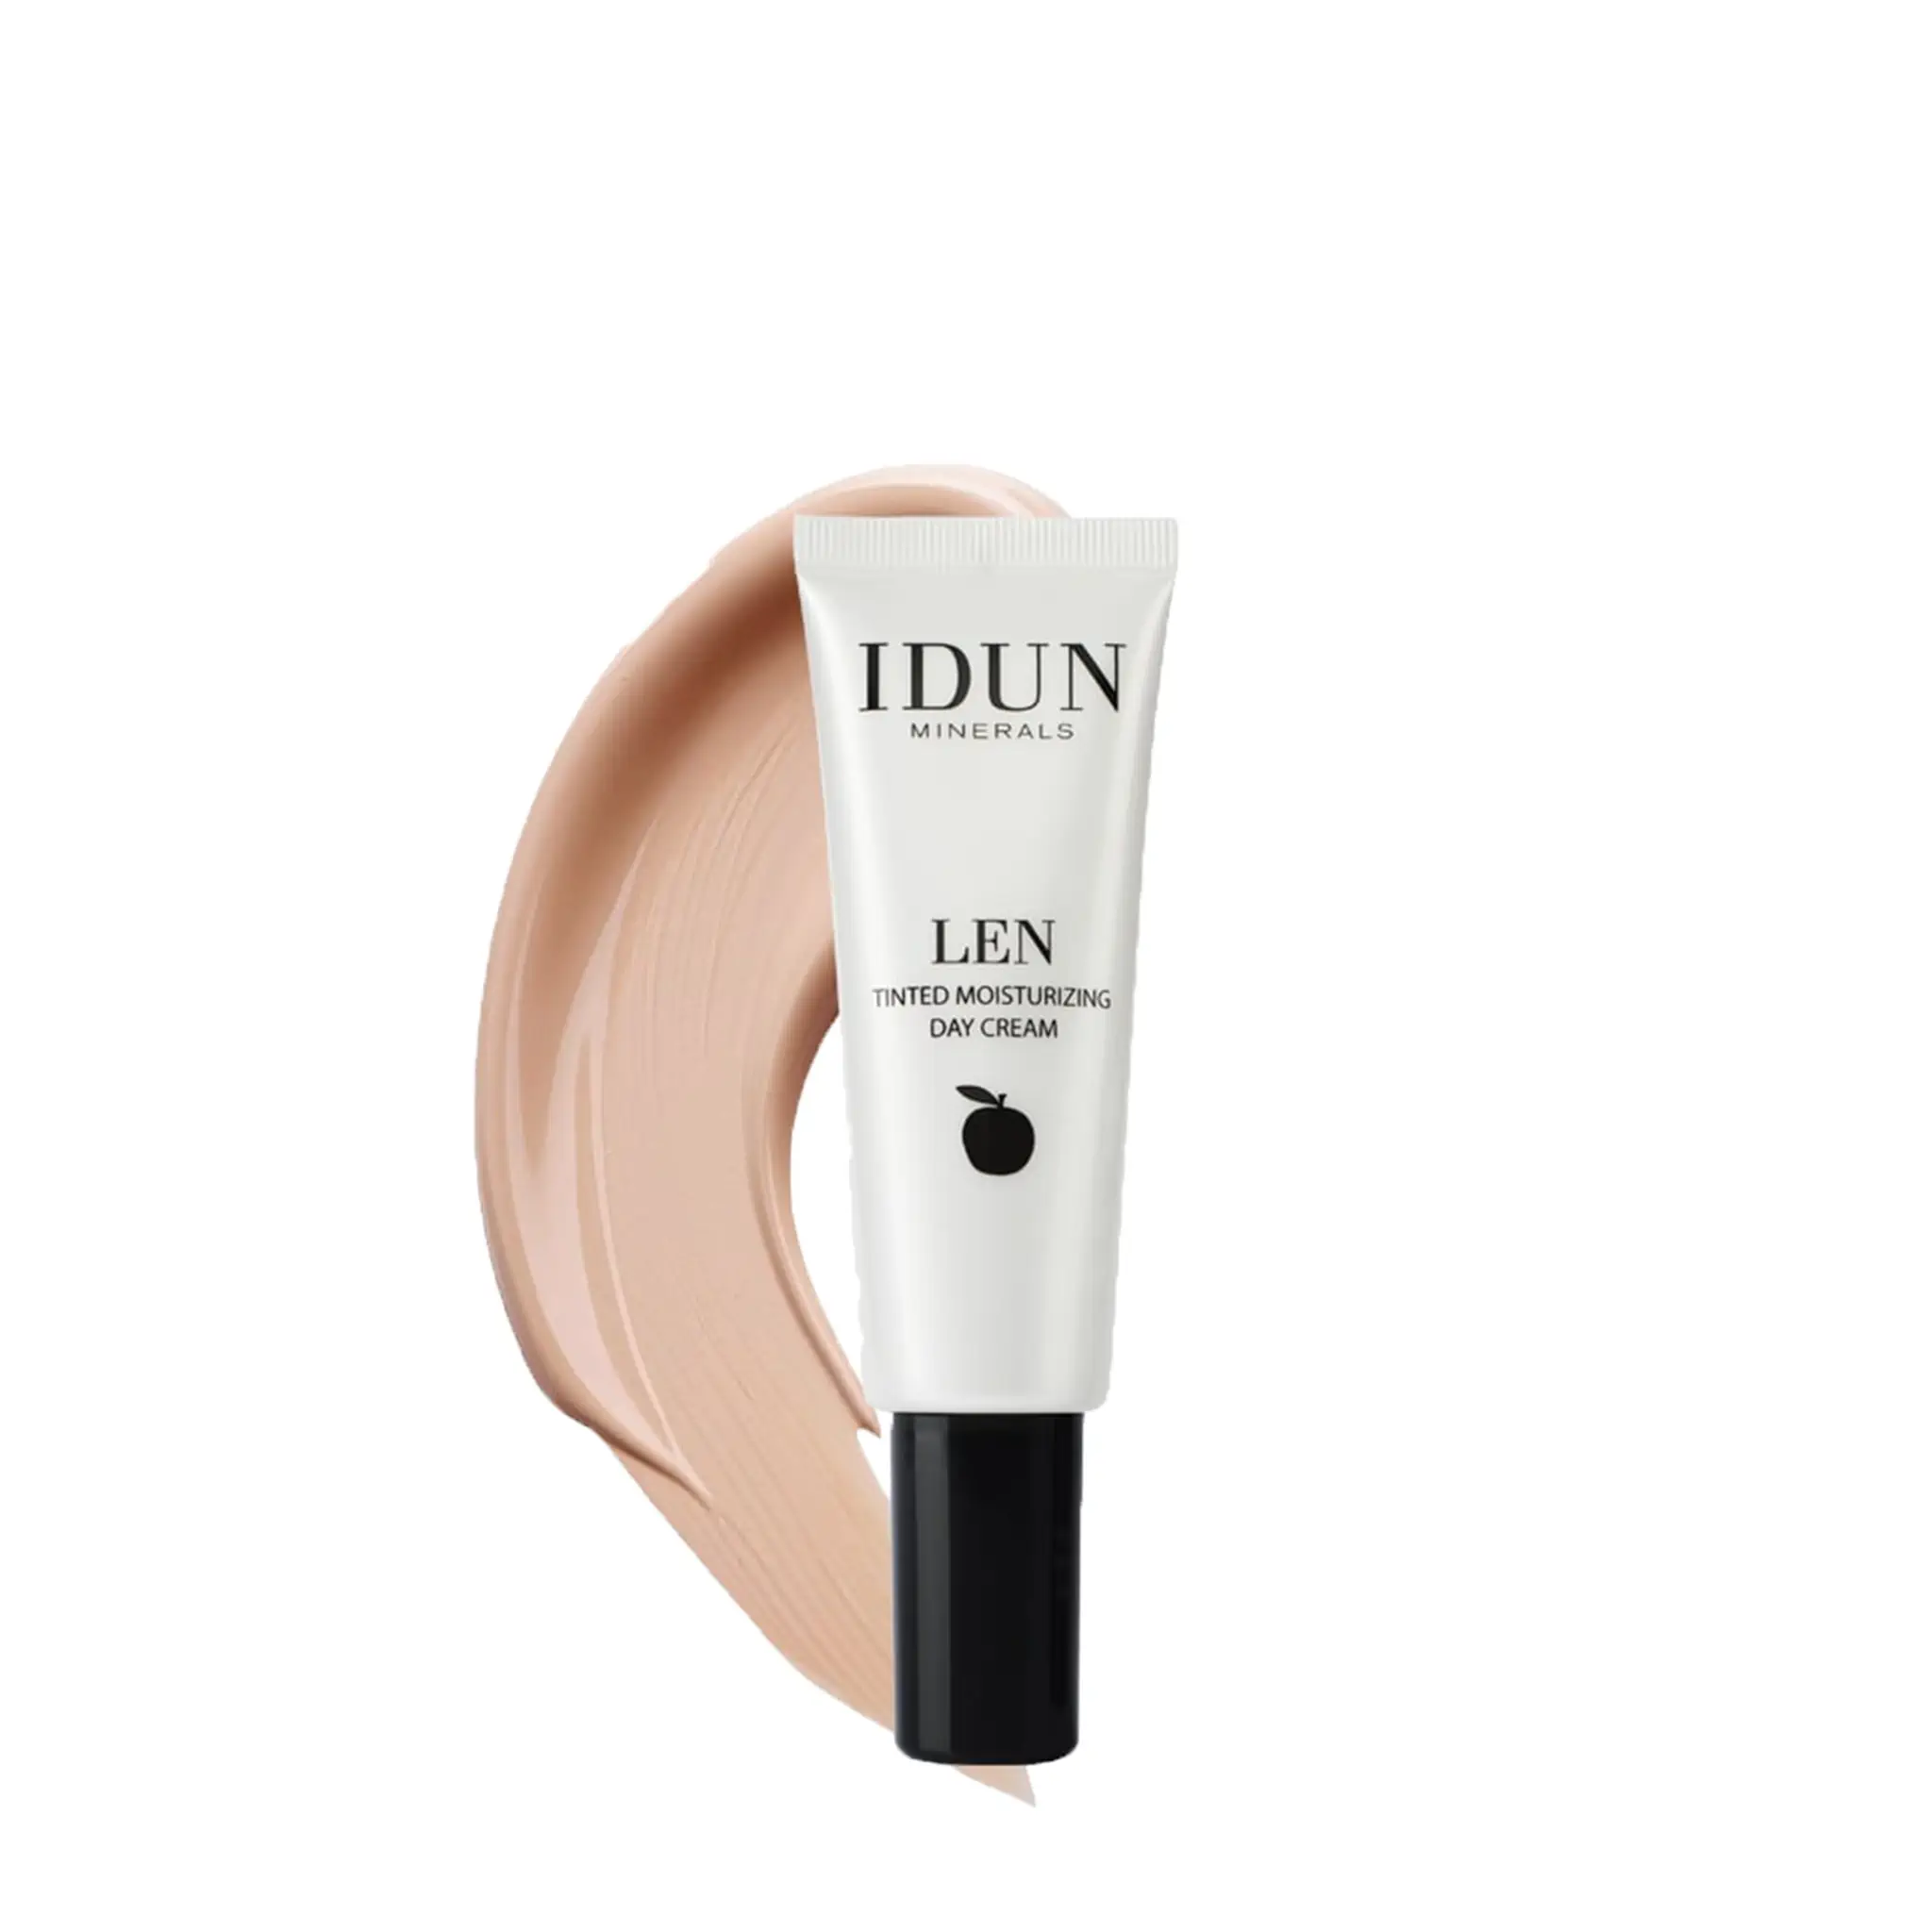 Idun Minerals Tinted Moisturizing Day Cream Len Medium